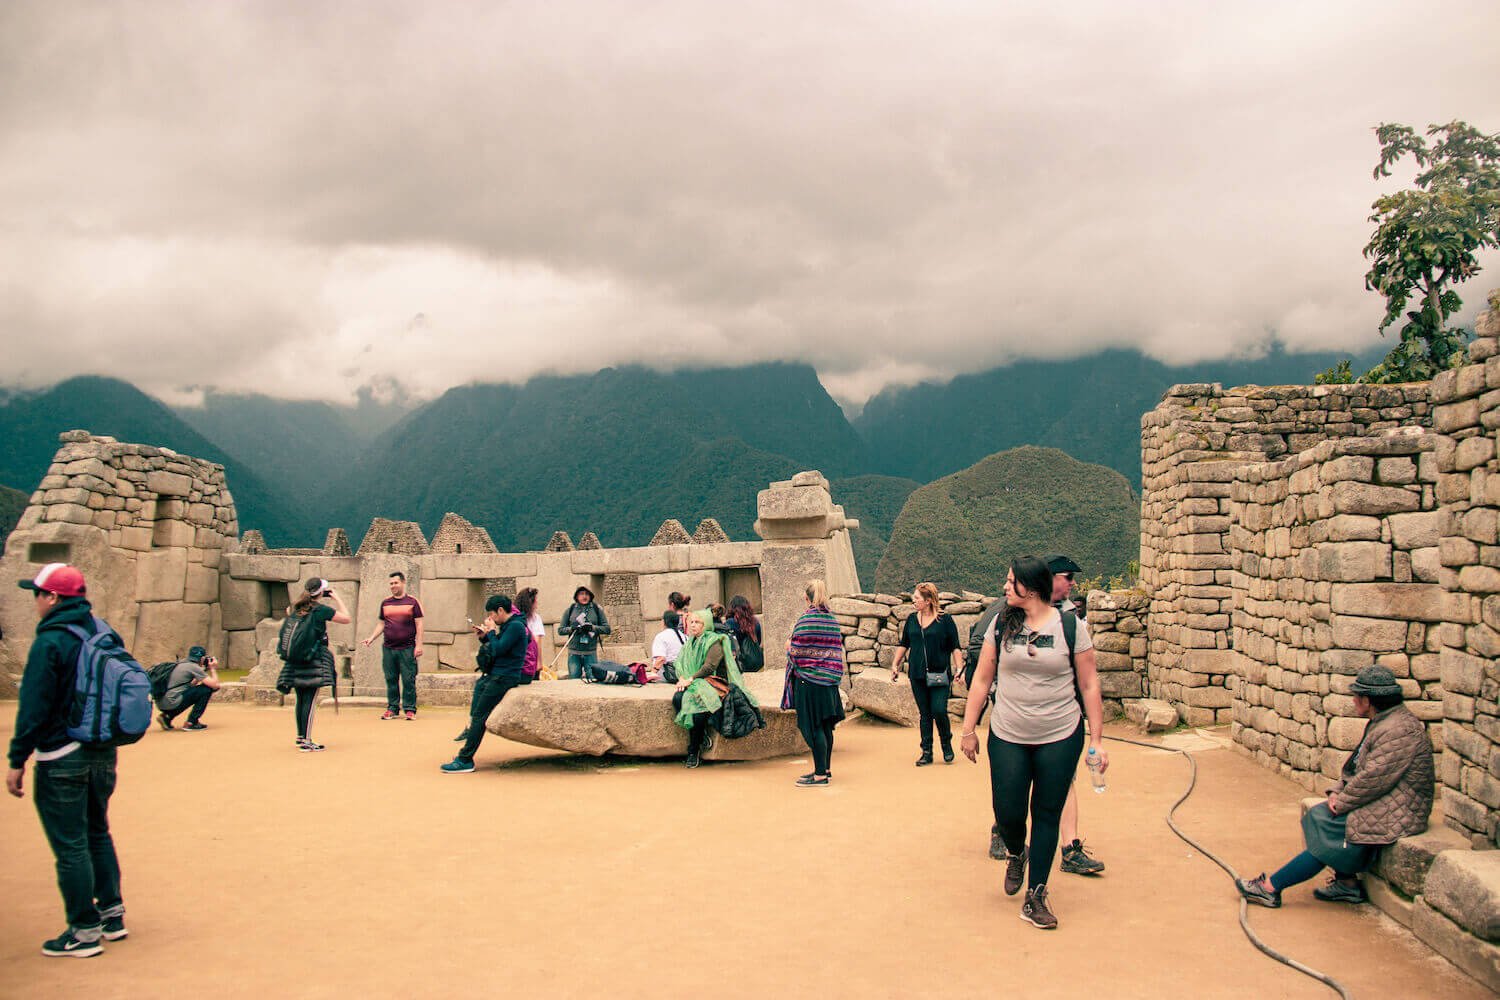 Machu Picchu 2 day tour - ruins